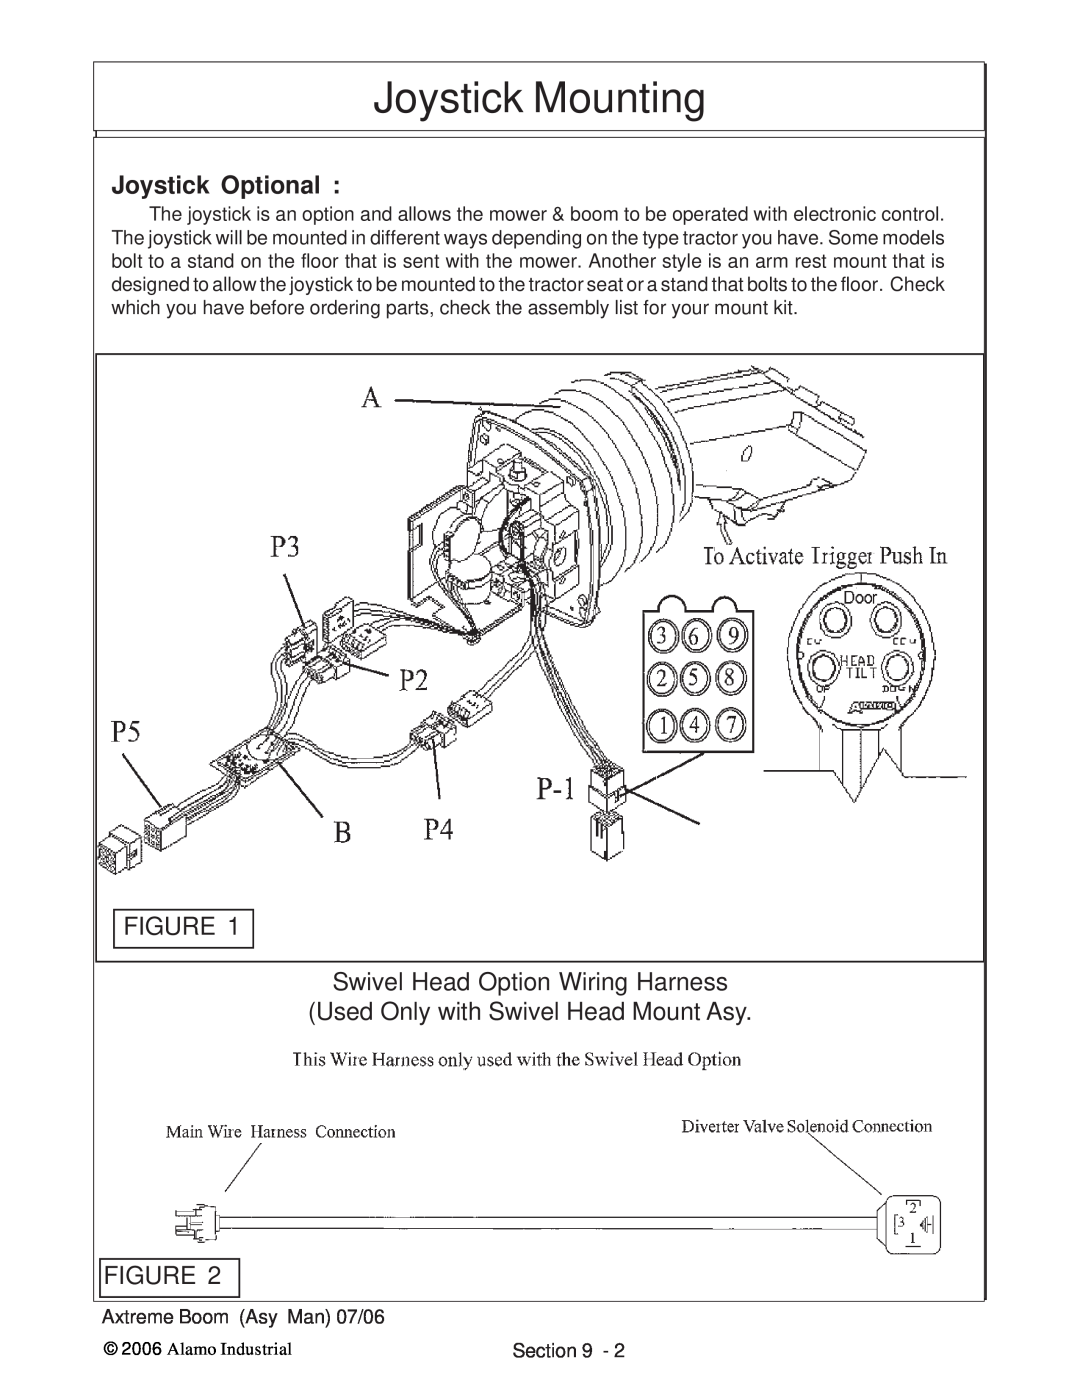 Alamo 02984405 instruction manual Joystick Mounting, Joystick Optional, Swivel Head Option Wiring Harness 